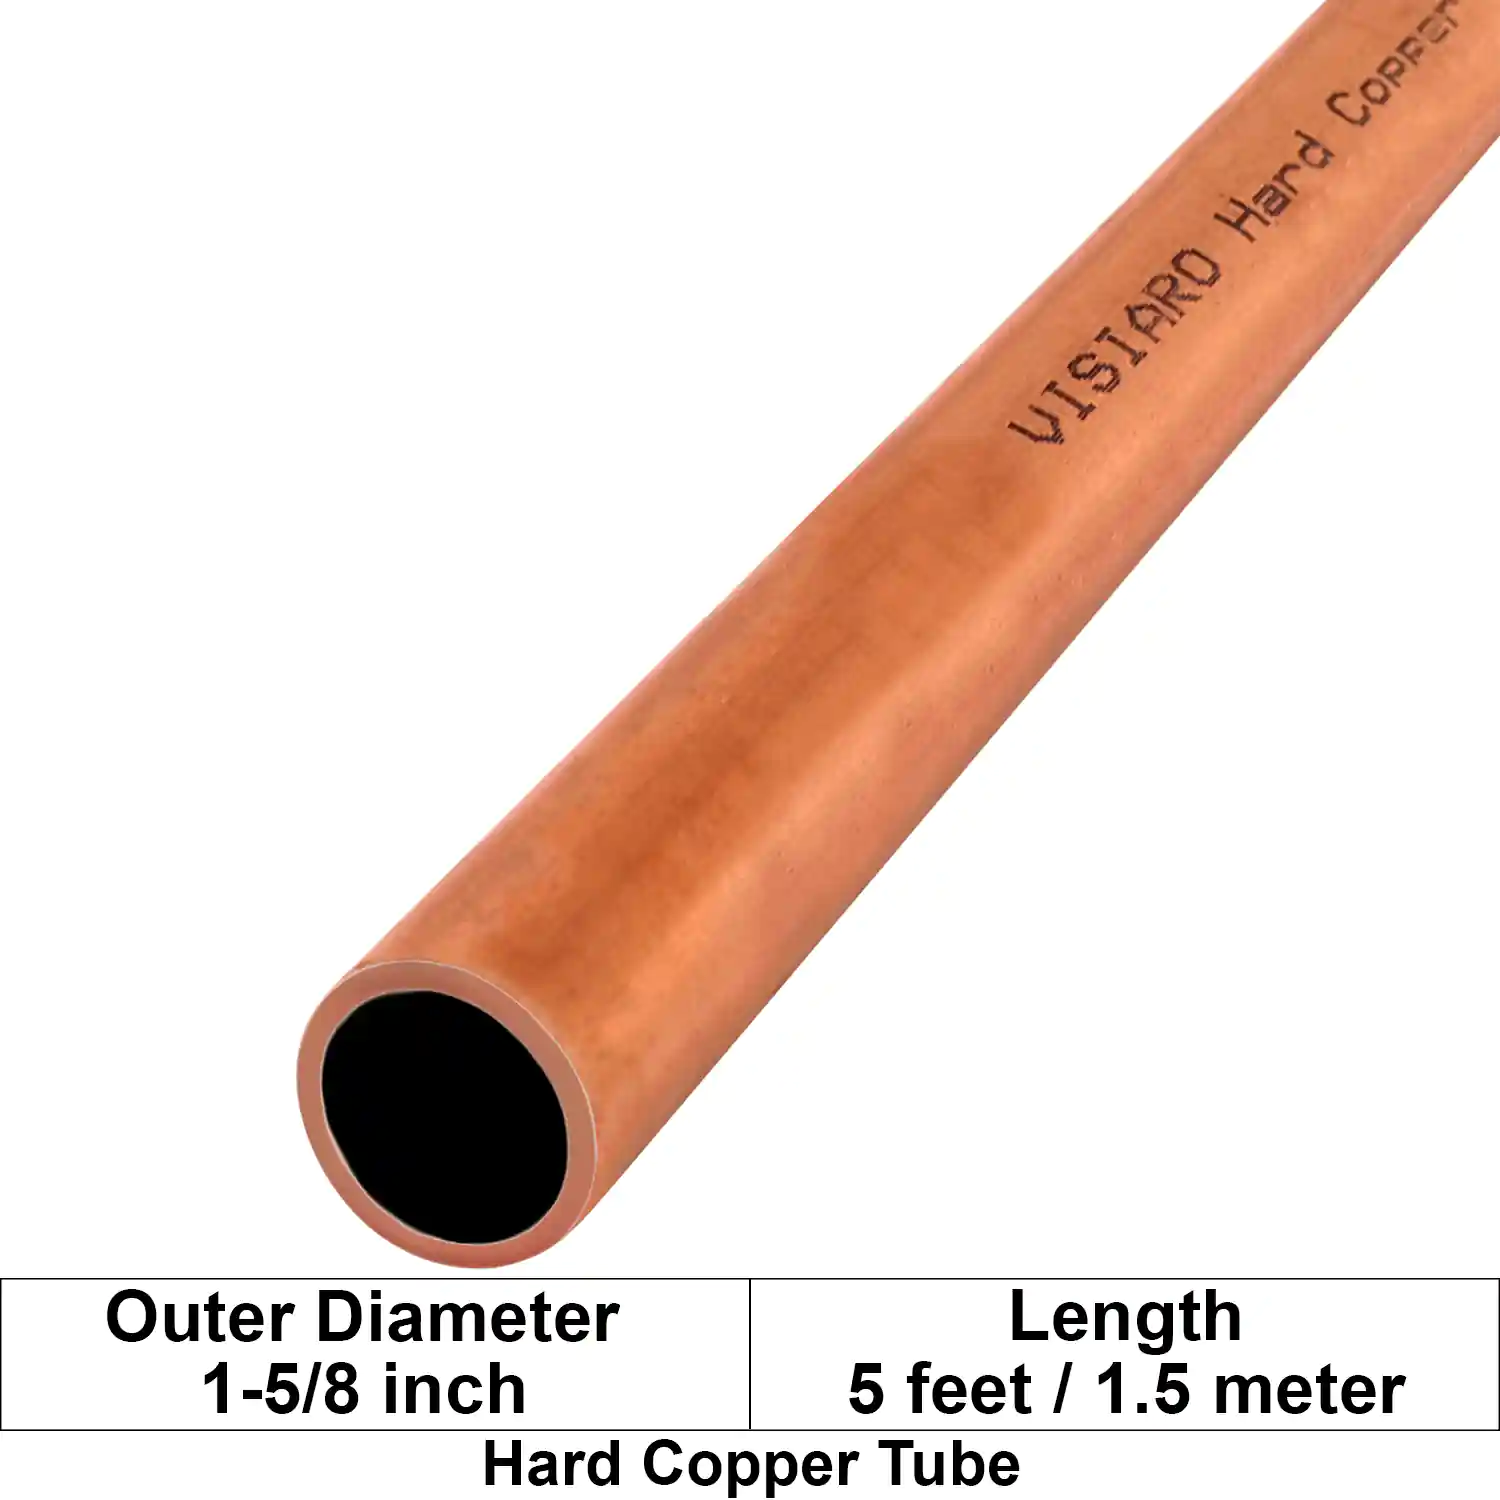 Visiaro Hard Copper Tube 5 feet long Outer Diameter - 1-5/8 inch